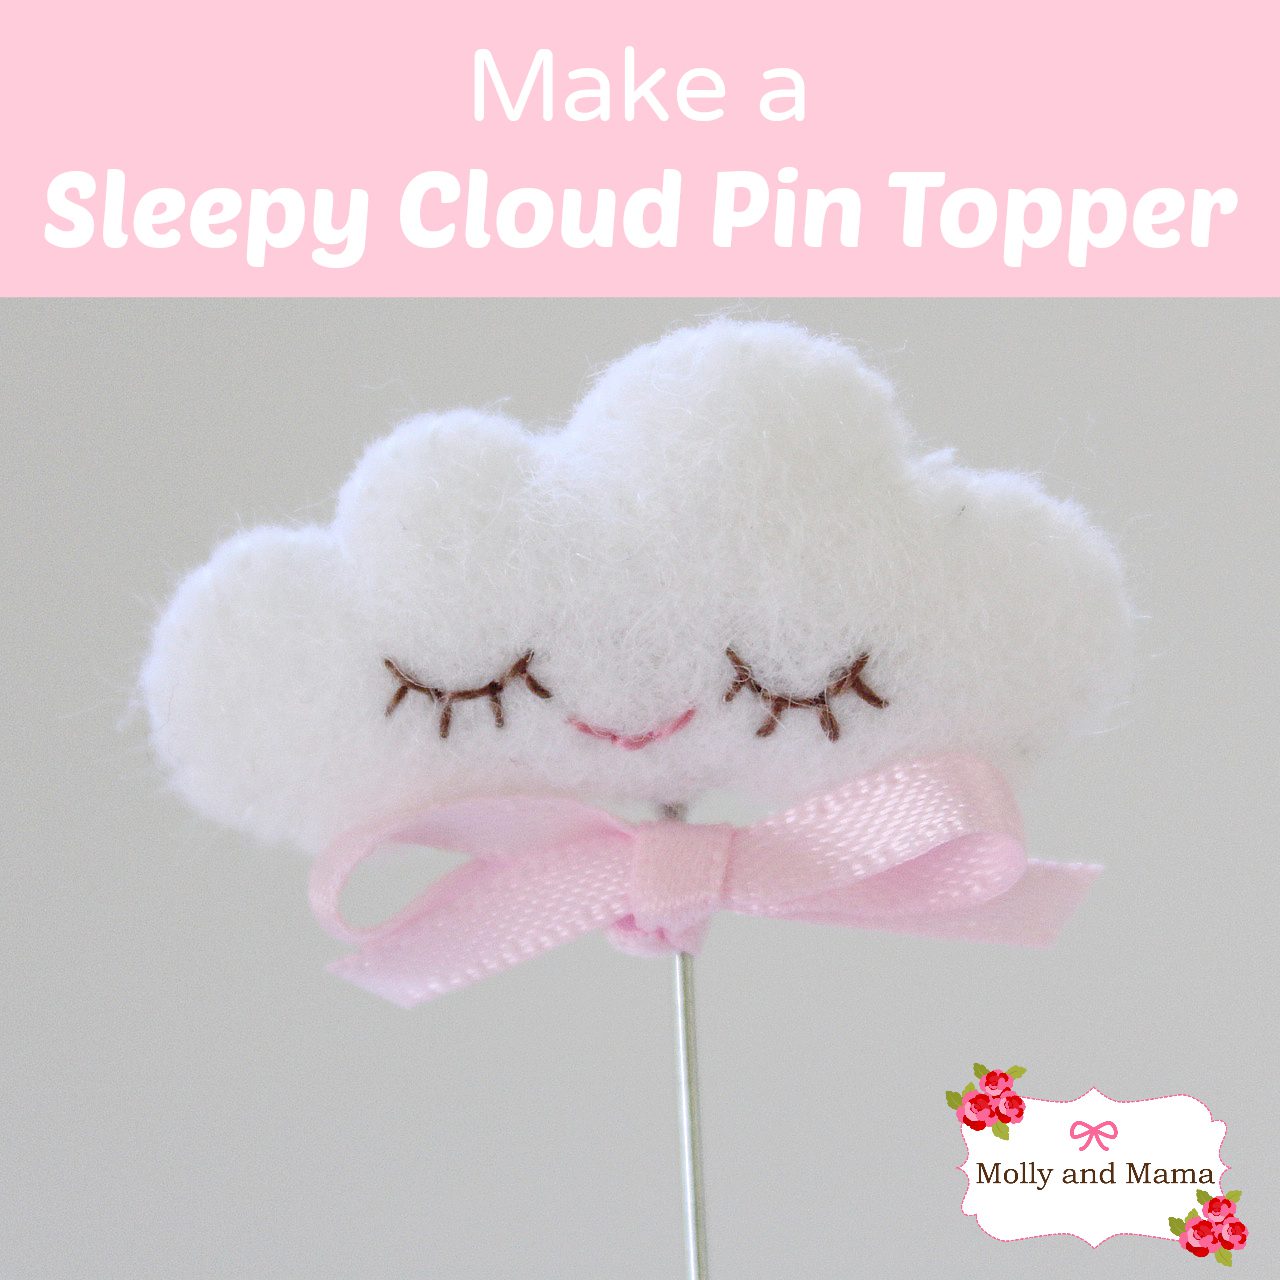 Make a Sleepy Cloud Pin Topper